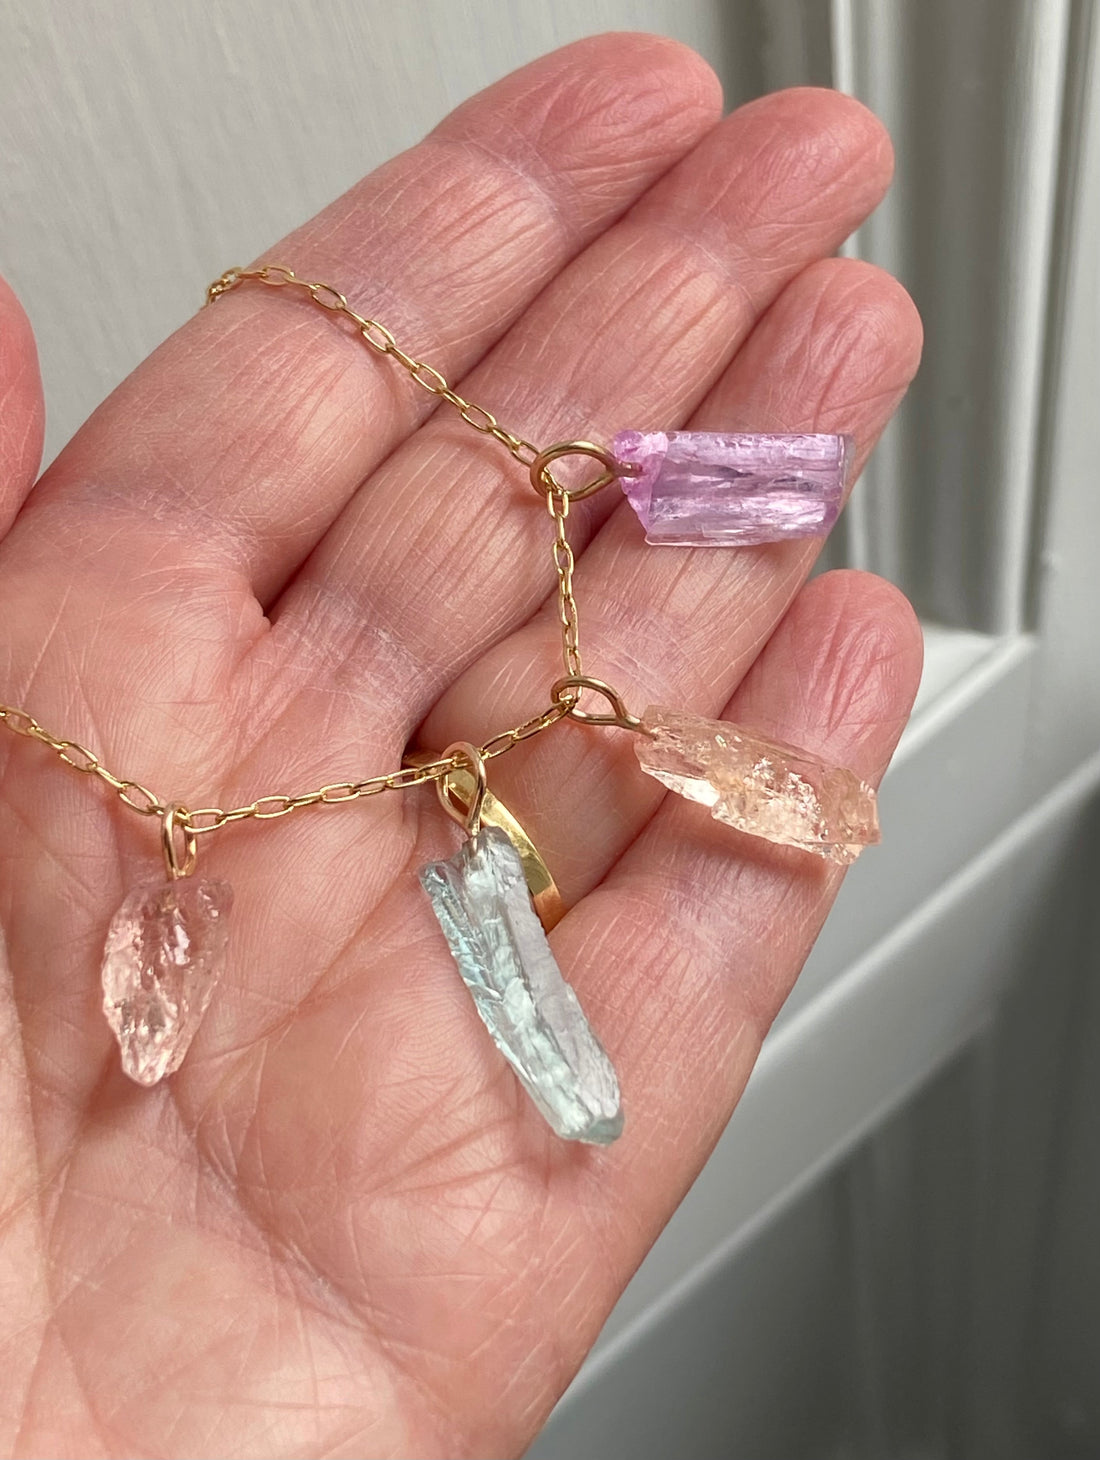 Raw Aquamarine Crystal Pendant Necklace